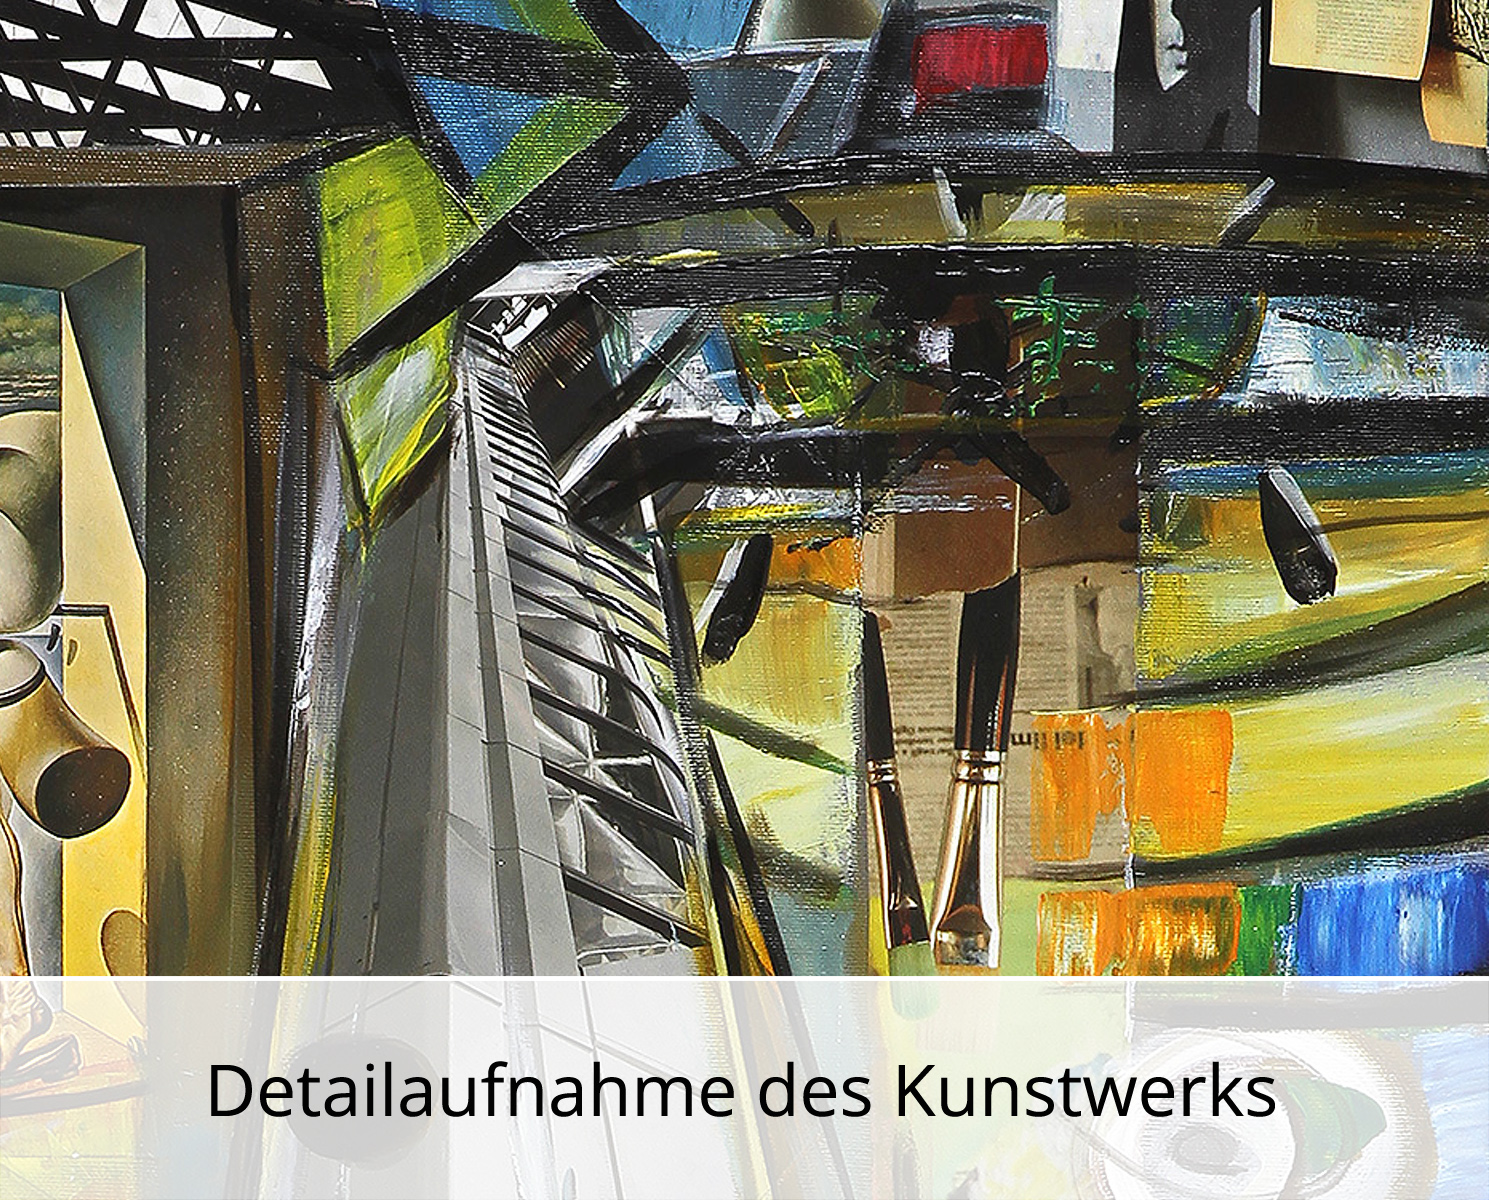 K. Namazi: "Behind the Surface III", Edition, signierter Kunstdruck